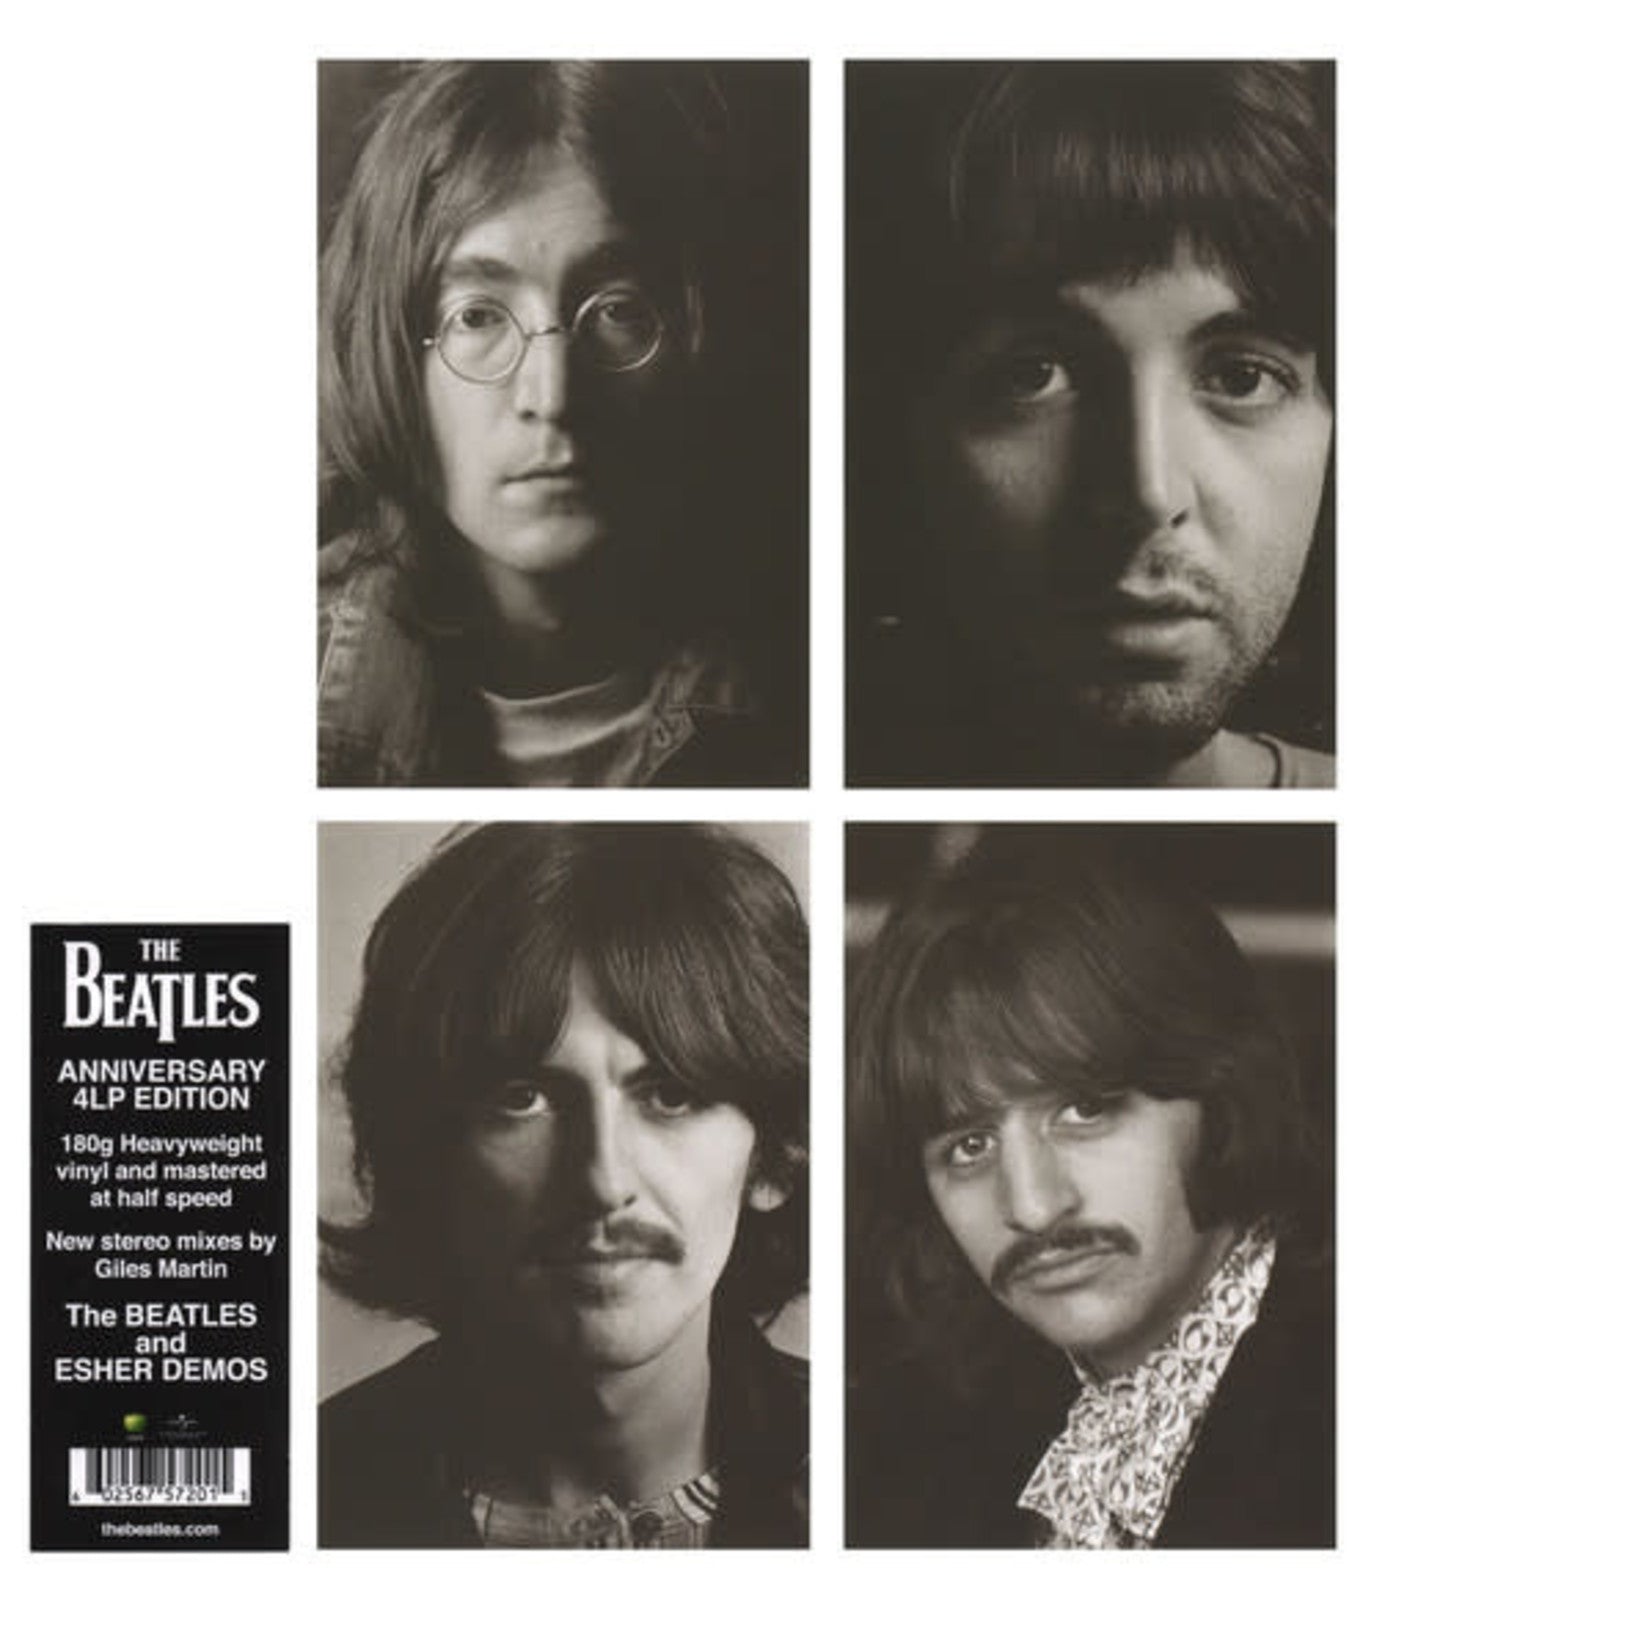 Tegne forsikring Dempsey gjorde det The Beatles - The Beatles: 50th Anniversary Edition (The White Album) - Art  Noise